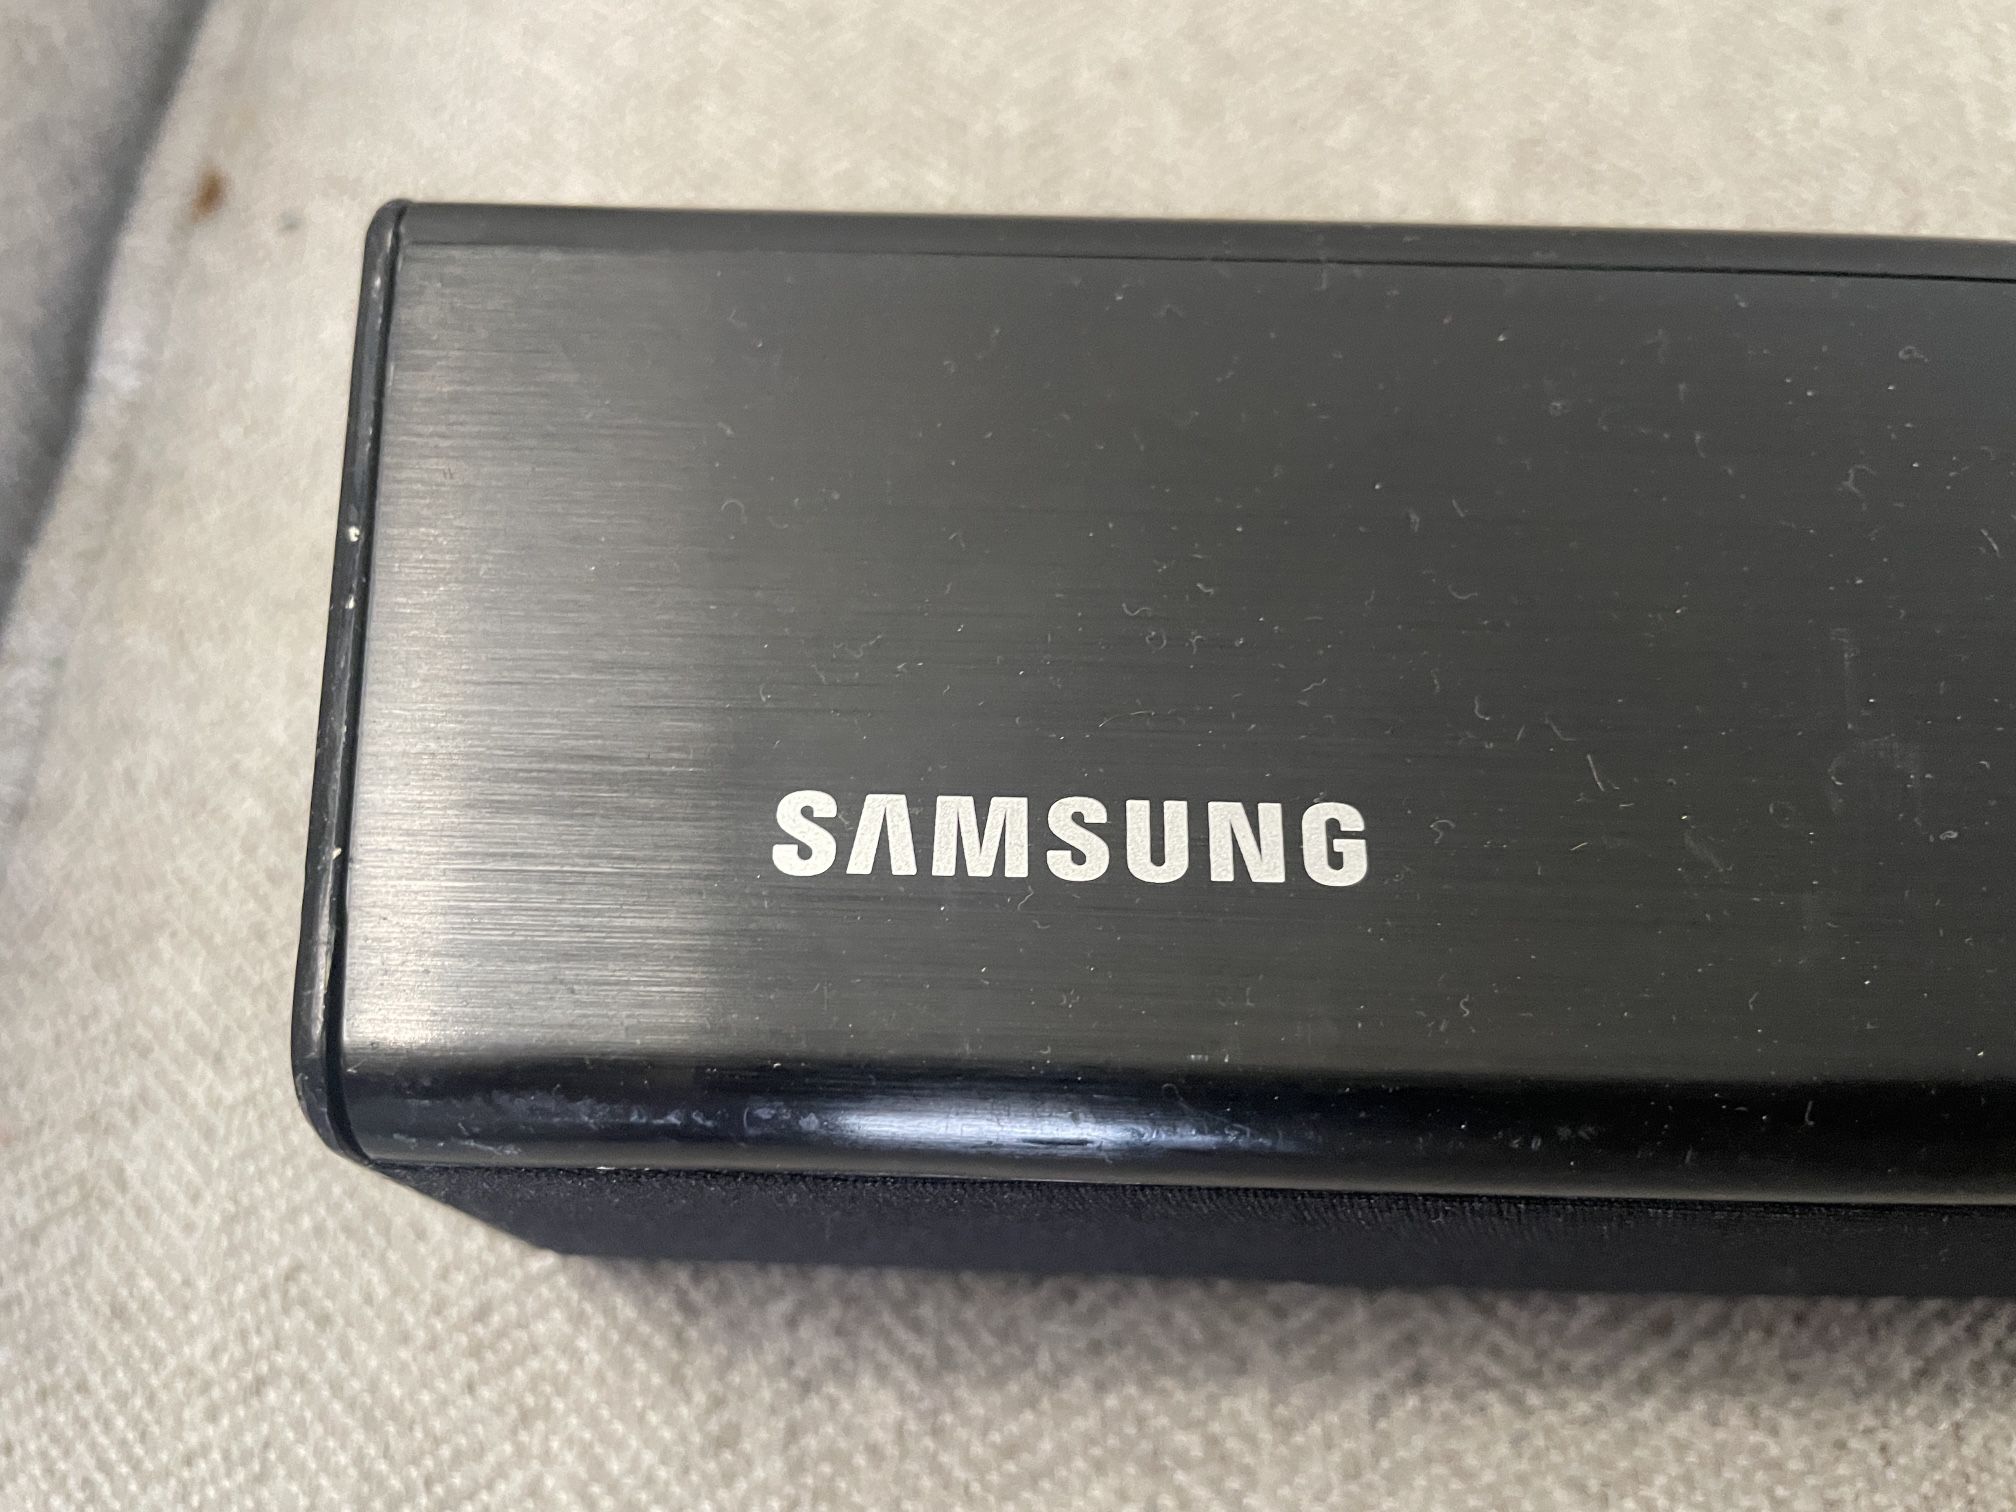 Samsung Bluetooth Sound Bar